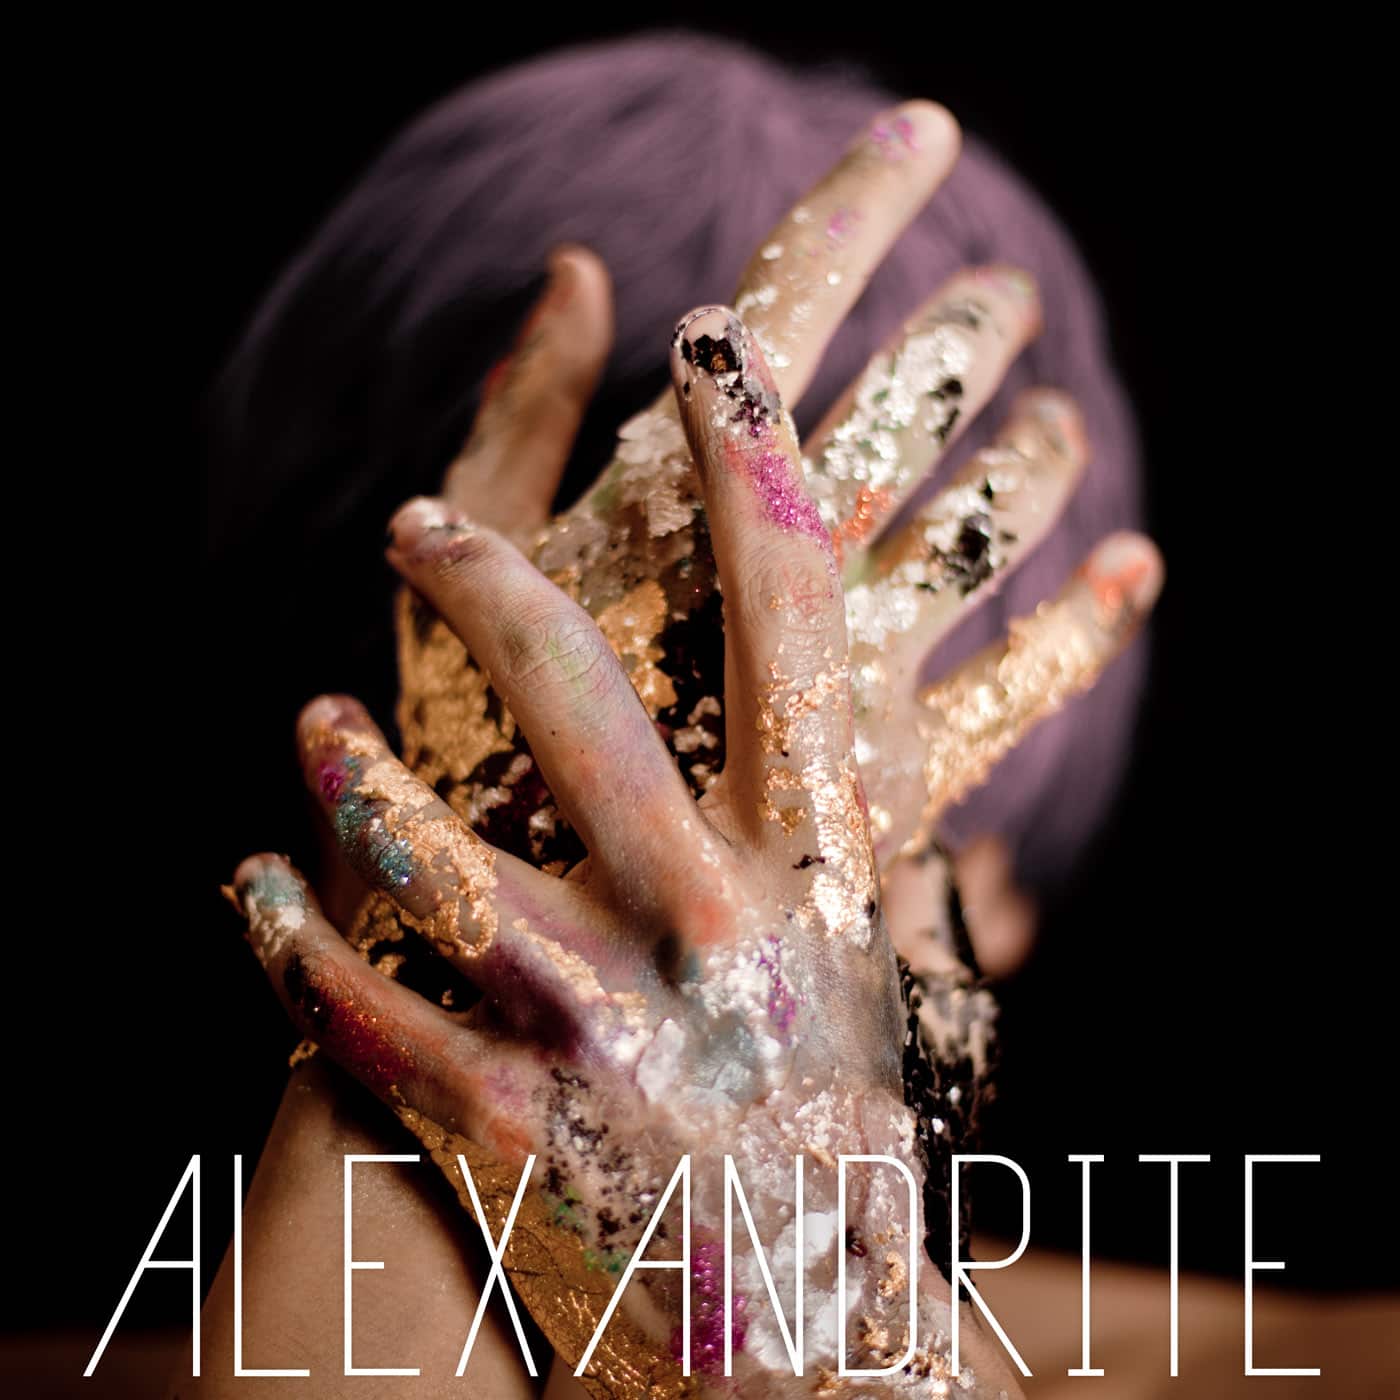 remix03 ALEXANDRITE -Cold Rouge-